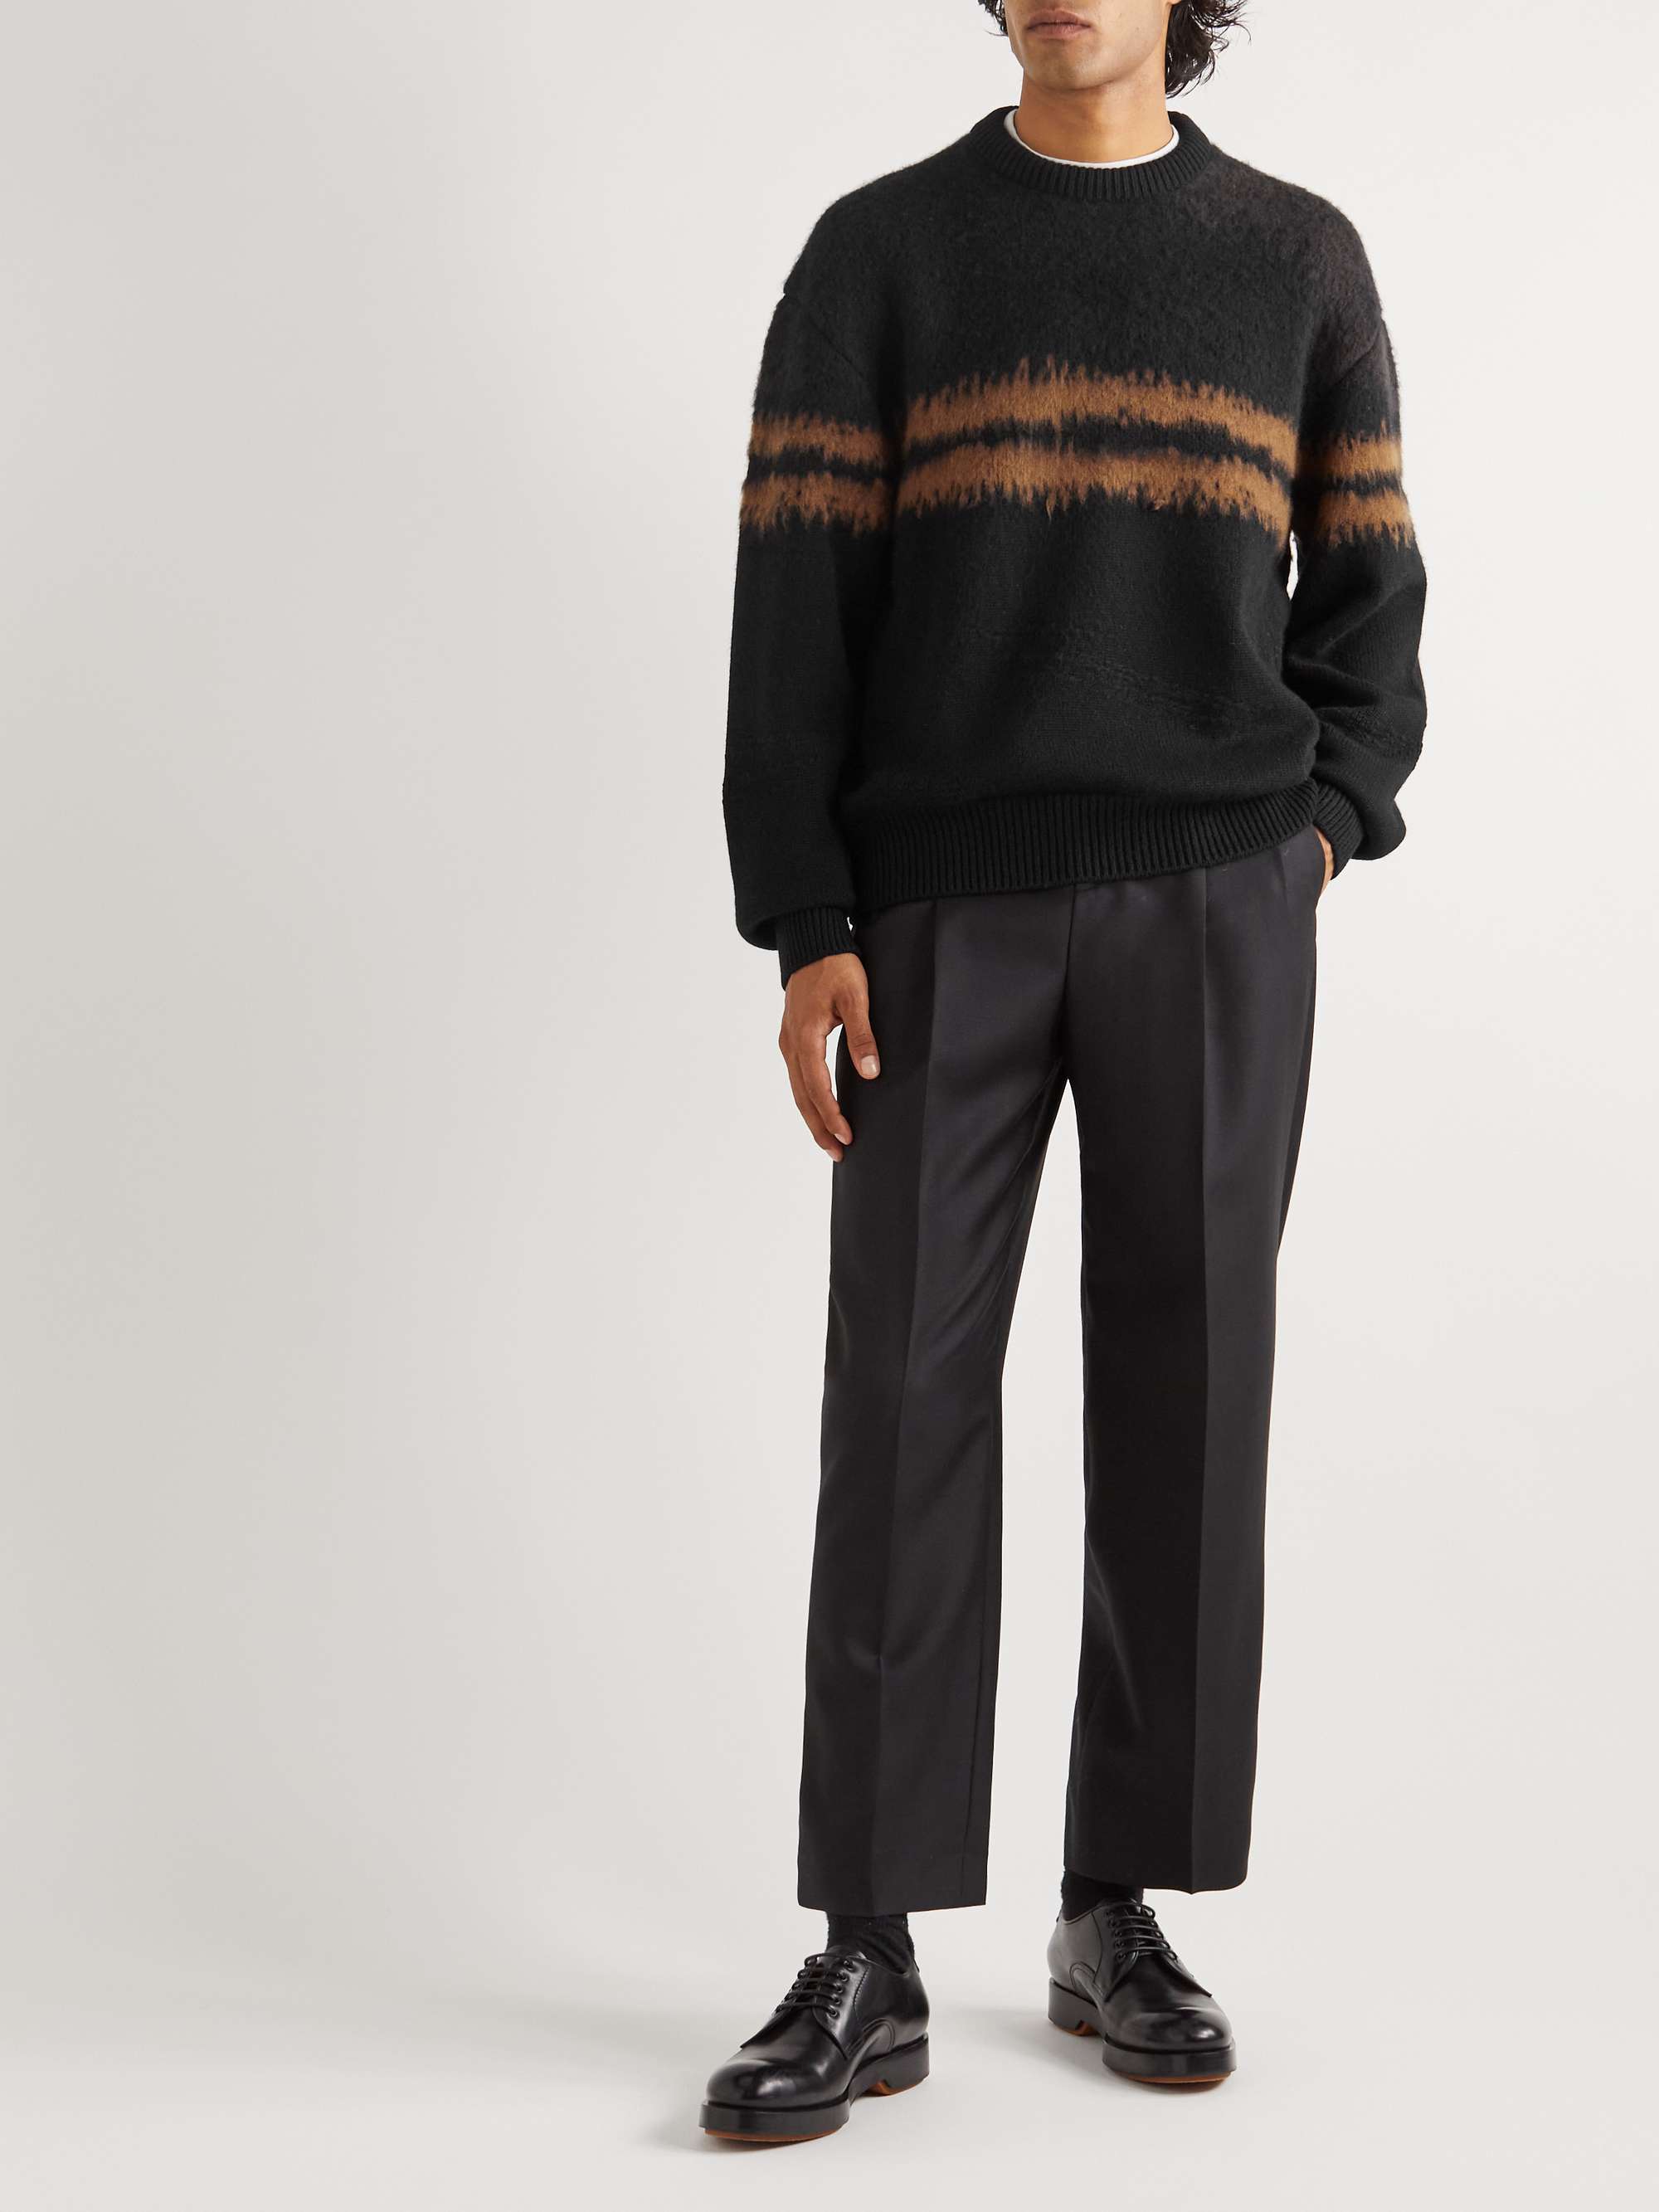 ZEGNA Striped Cashmere Sweater for Men | MR PORTER